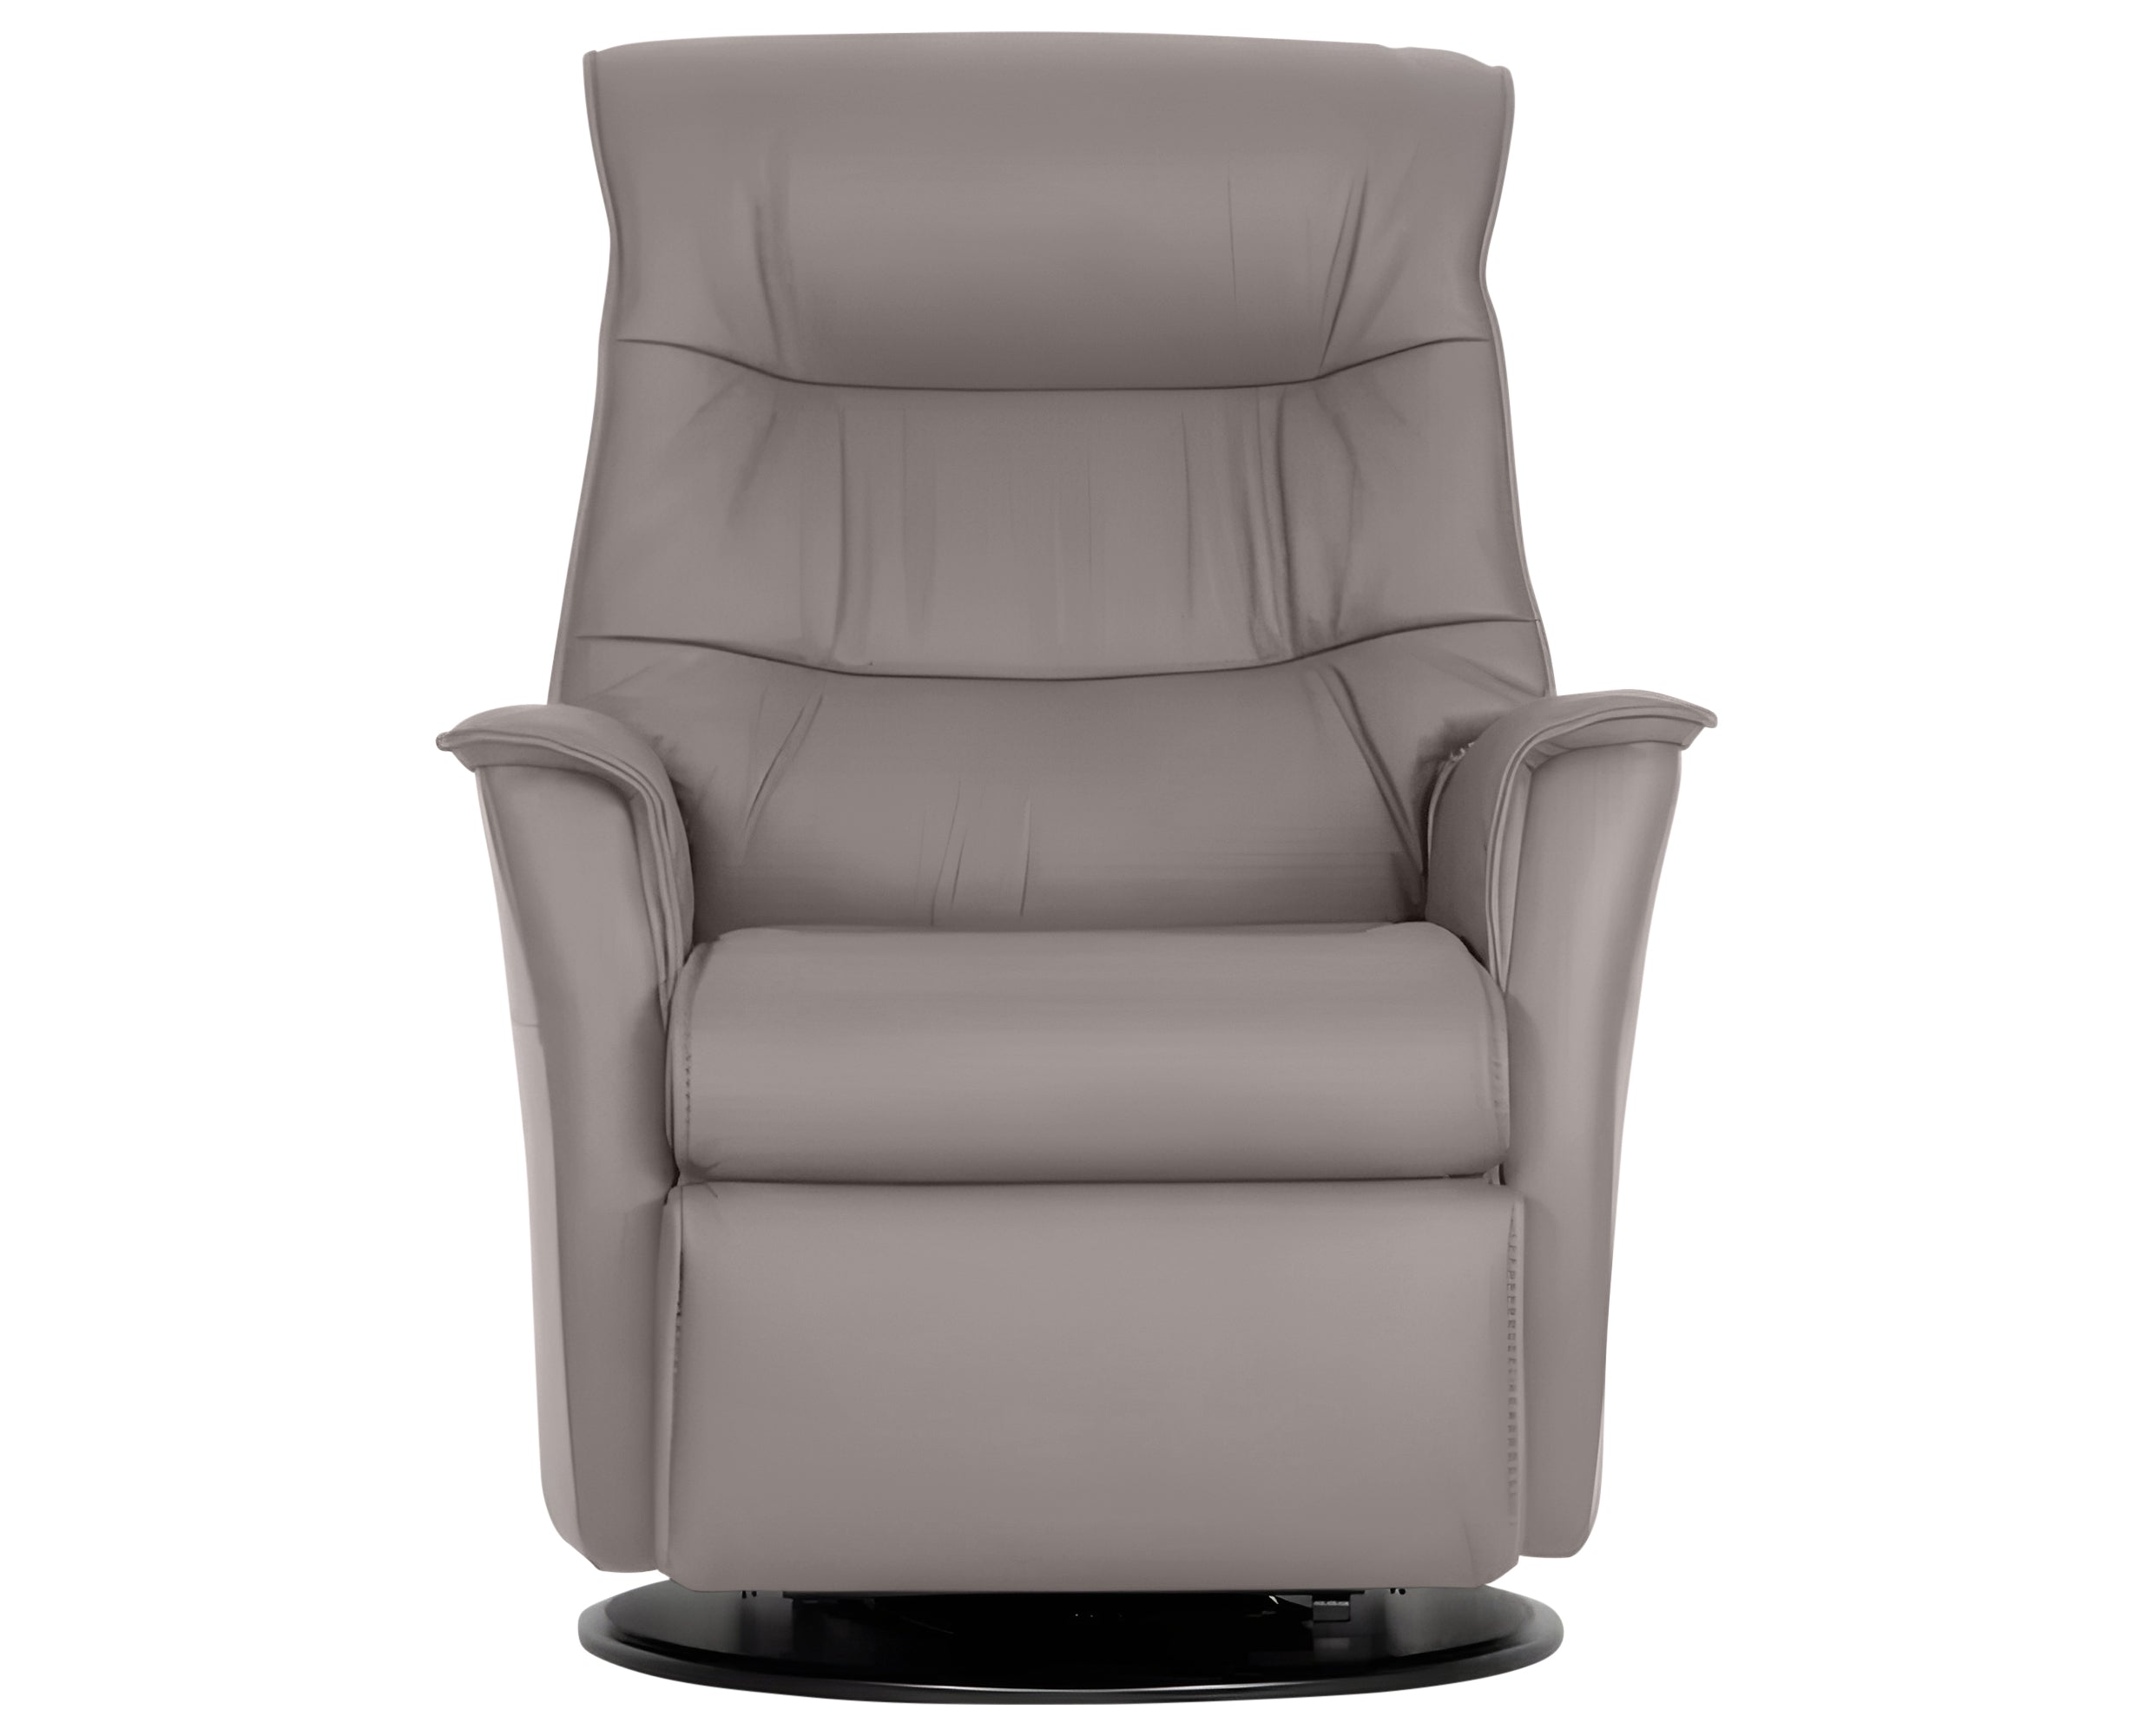 Trend Leather Cinder M | Norwegian Comfort Paramount Recliner - Promo | Valley Ridge Furniture